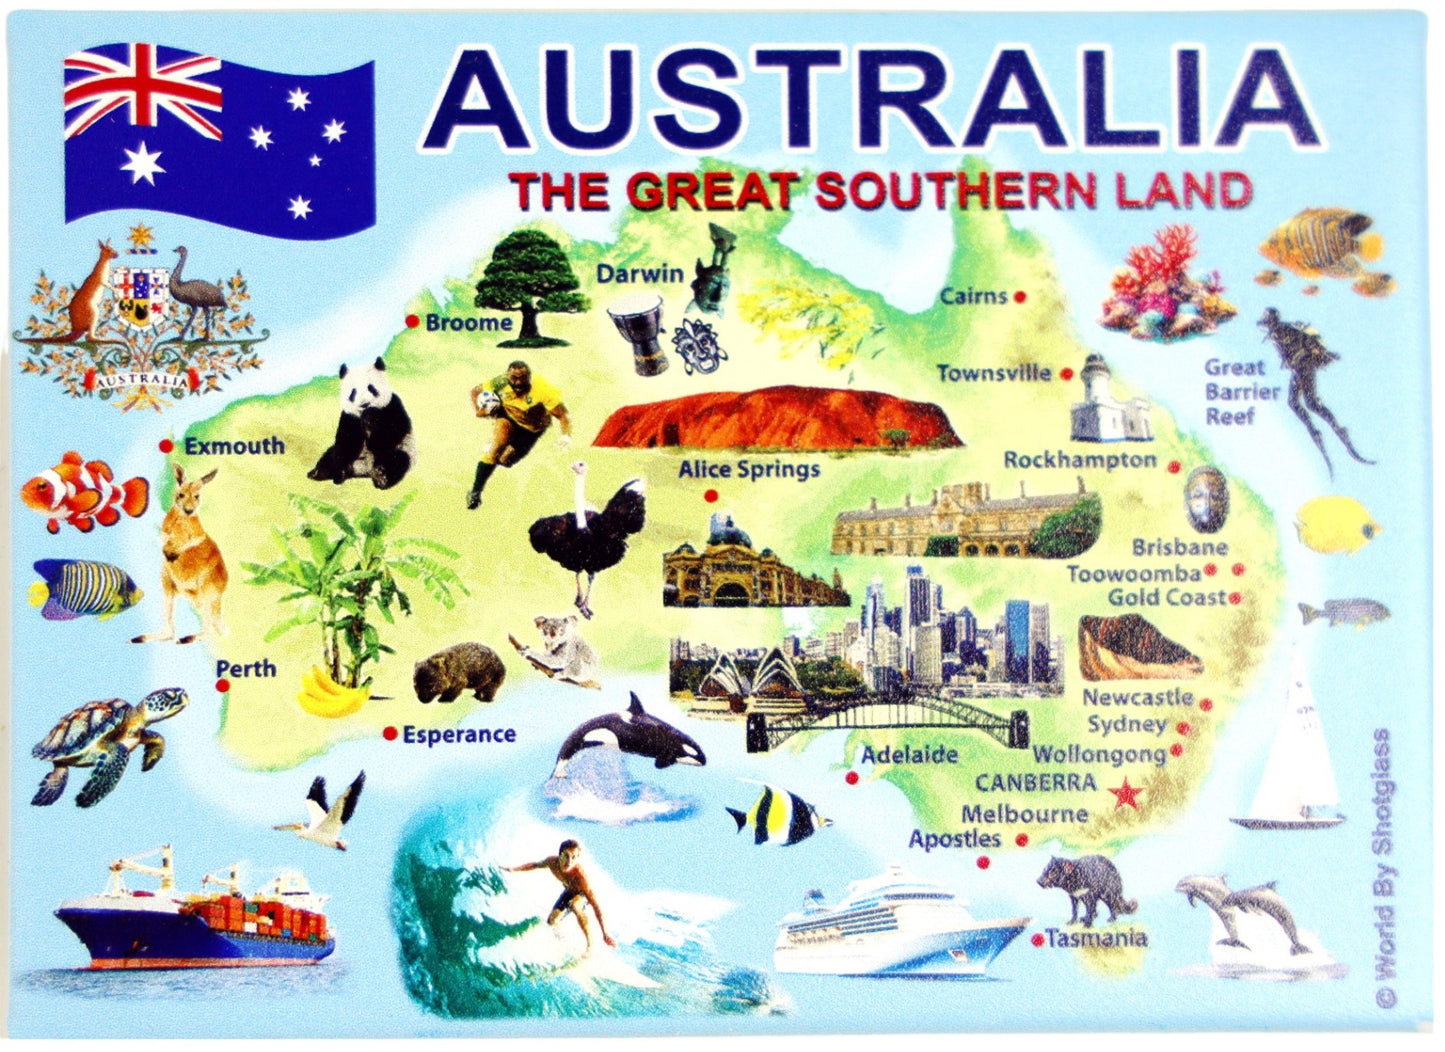 Australia Graphic Map and Attractions Souvenir Fridge Magnet 2.5 X 3.5